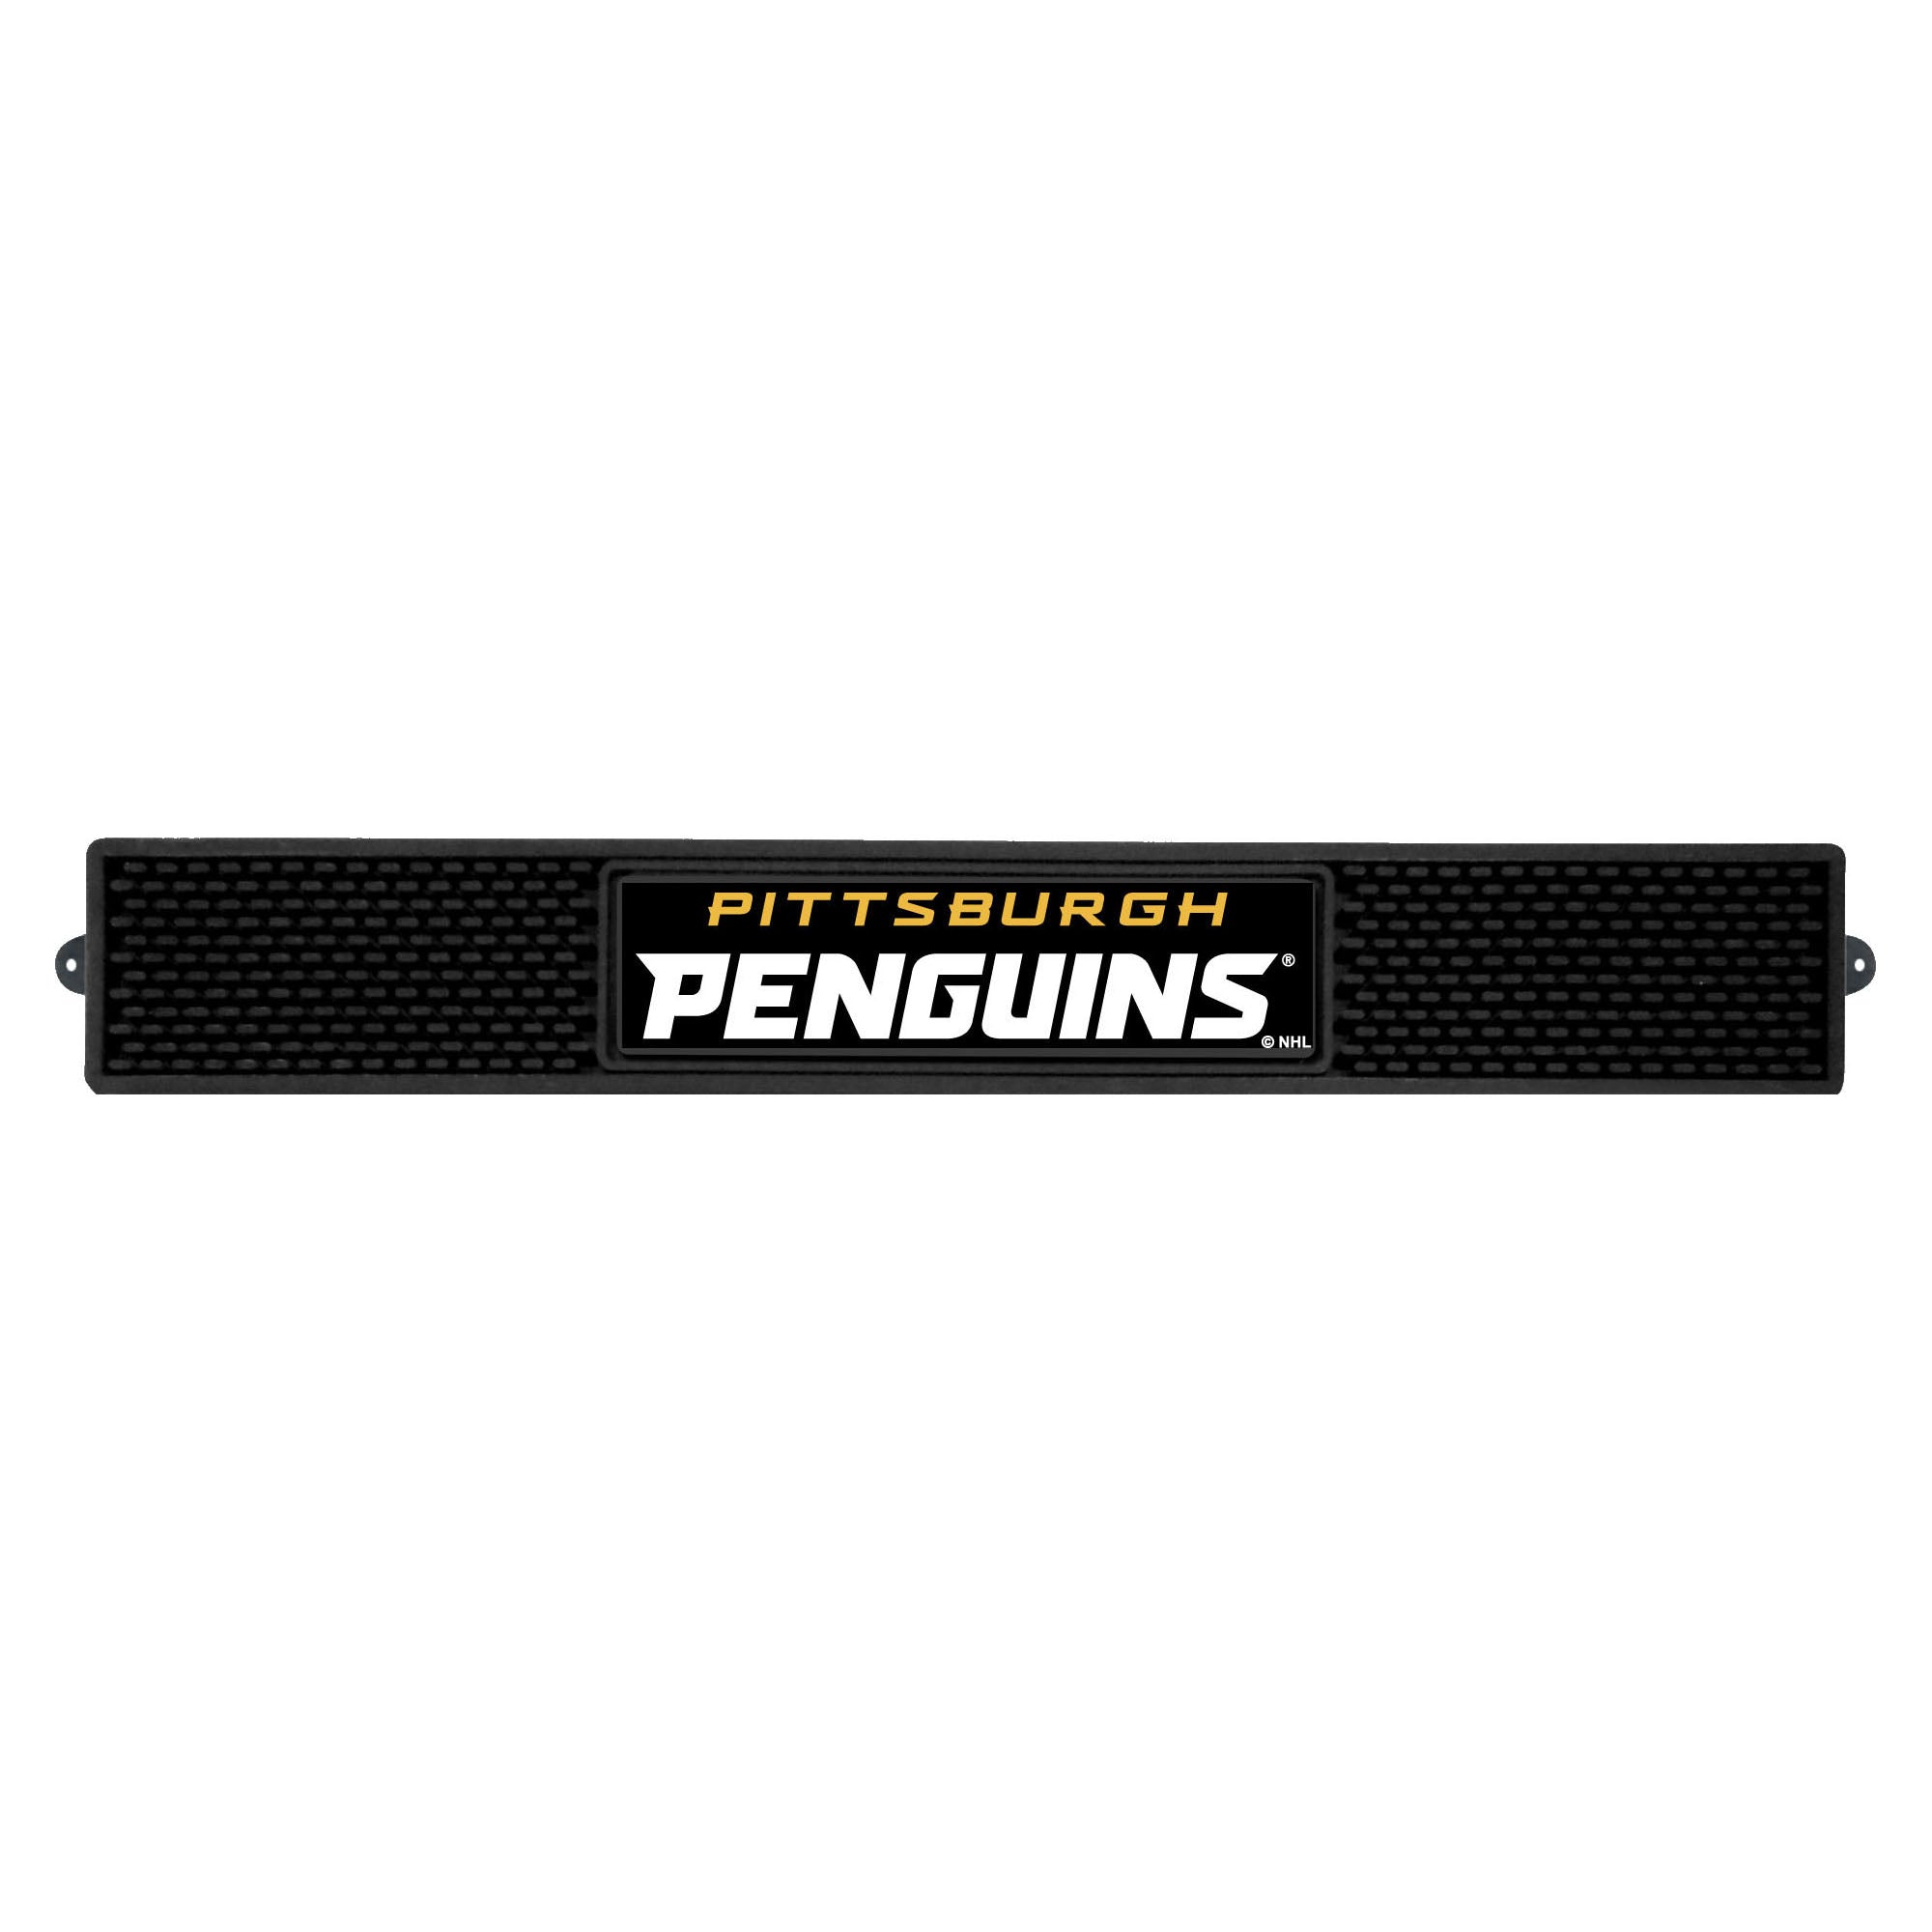 NHL - Pittsburgh Penguins Drink Mat